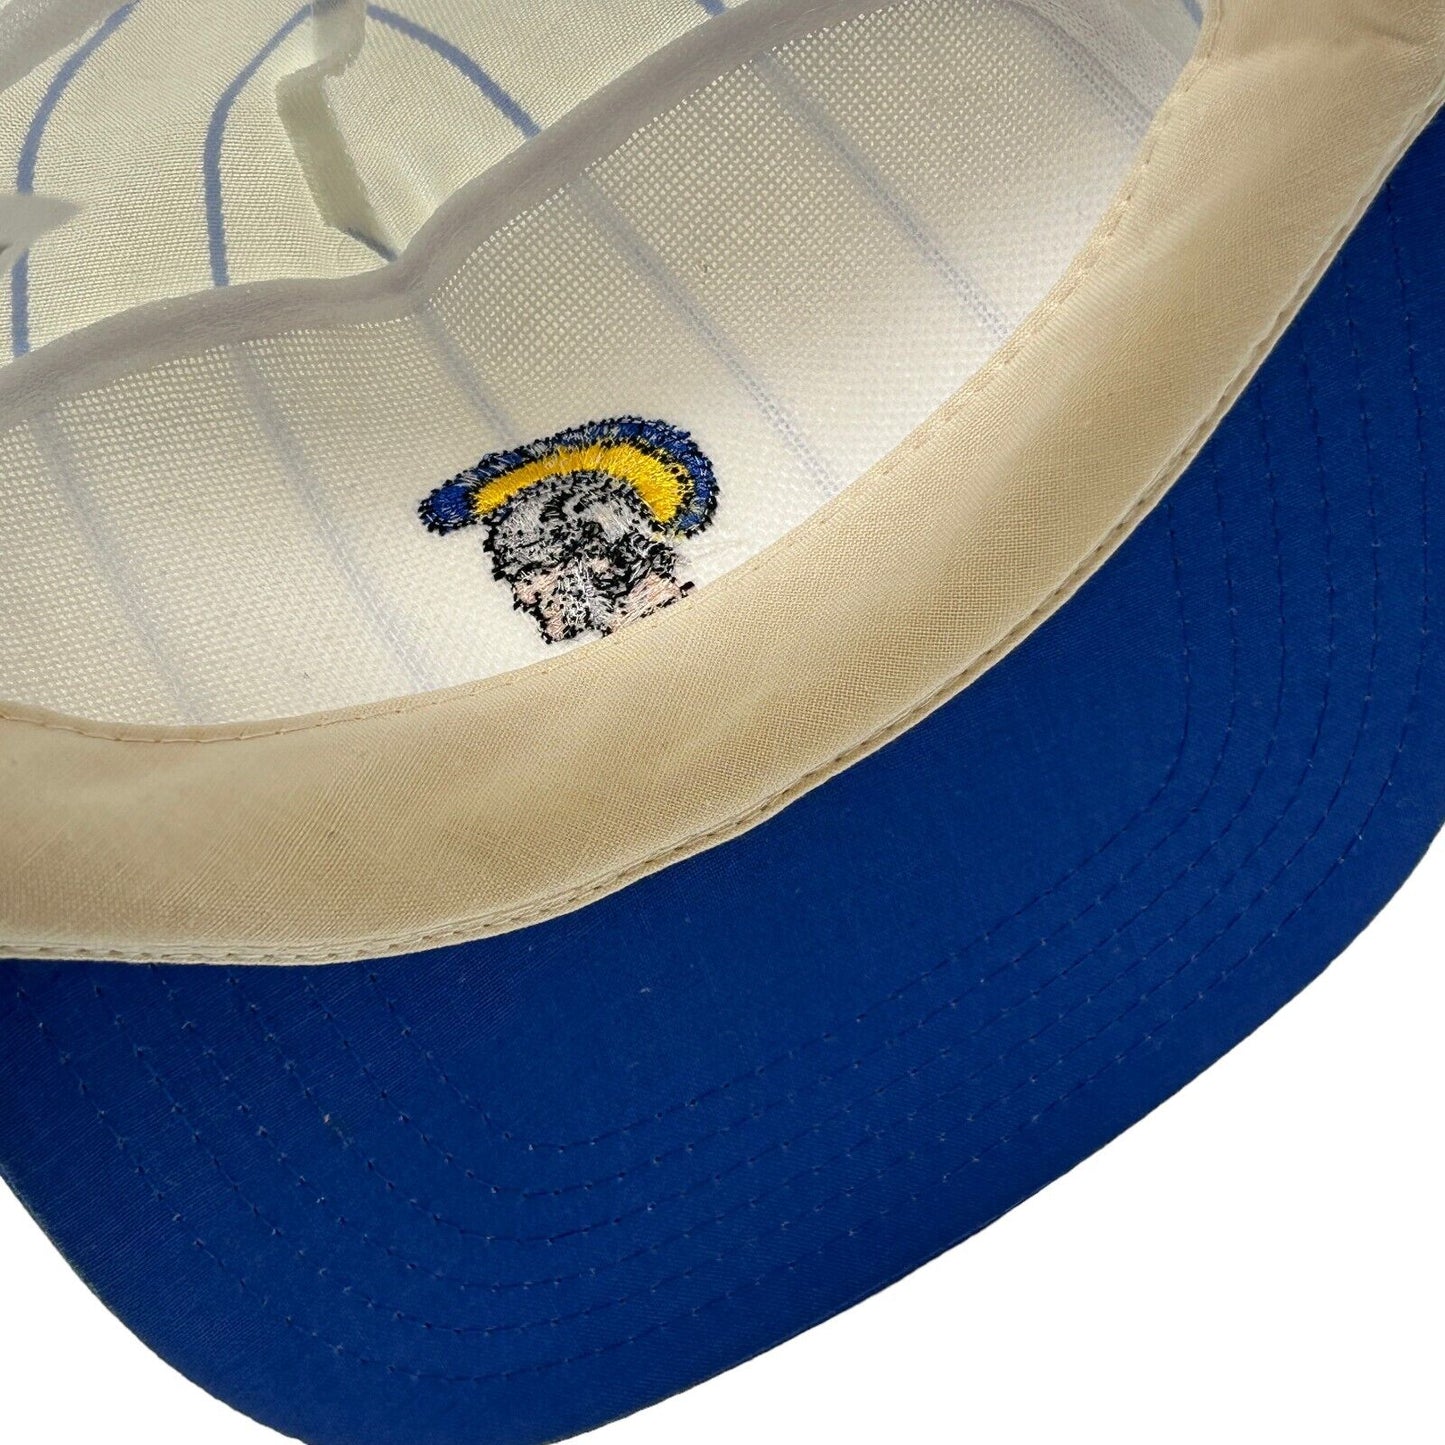 USC Trojans Vintage 80s 90s Hat NCAA University Pinstriped Snapback Baseball Cap